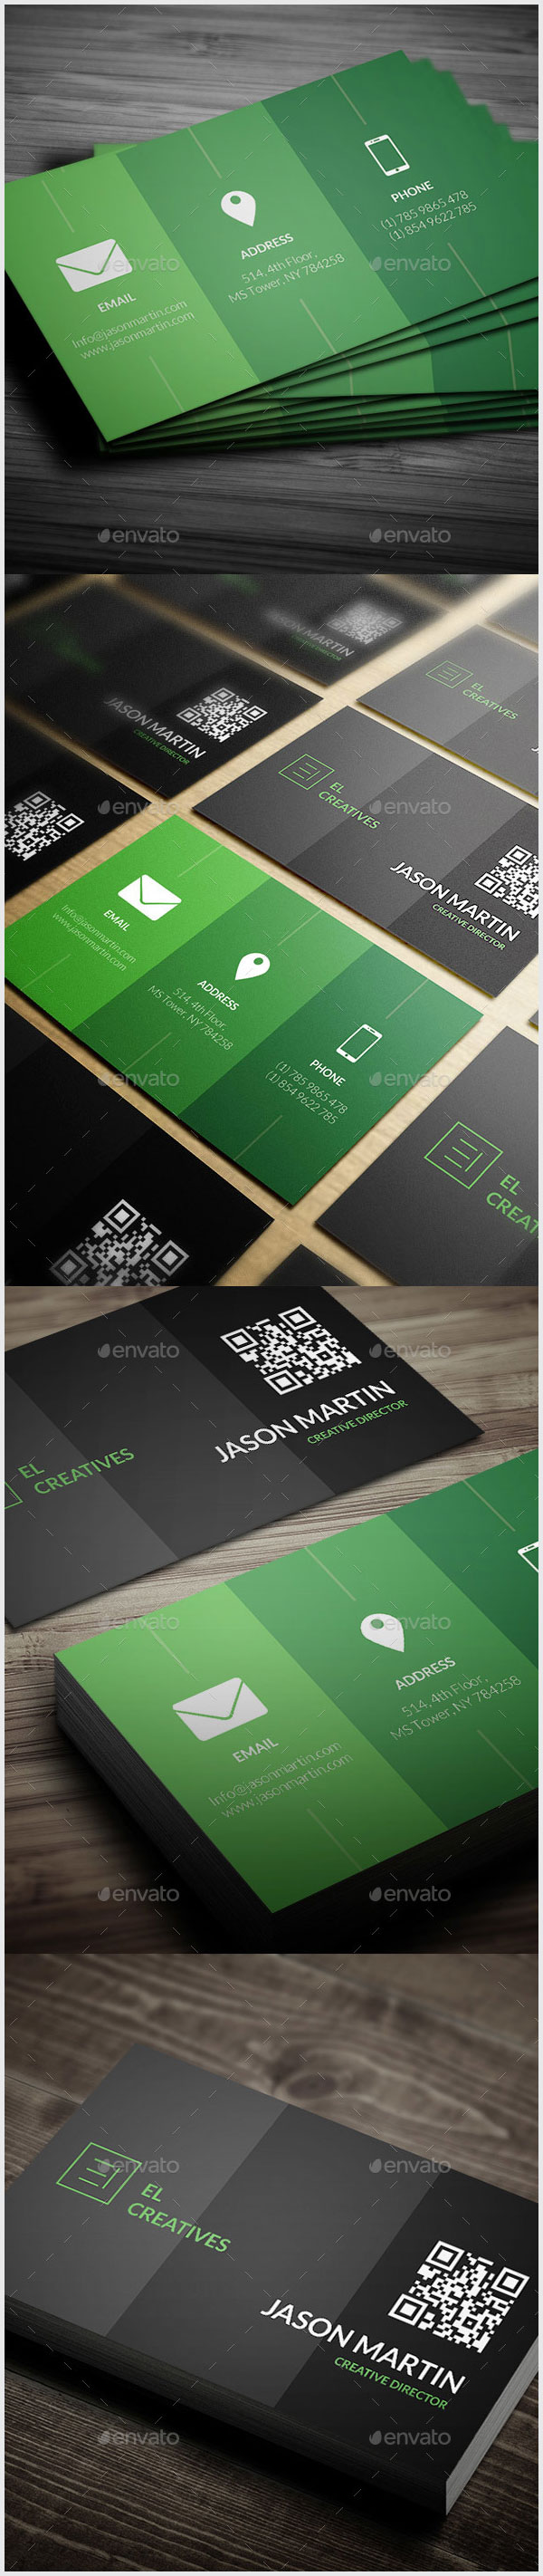 Minimal-Metro-Business-Card-For-Creative-Designers